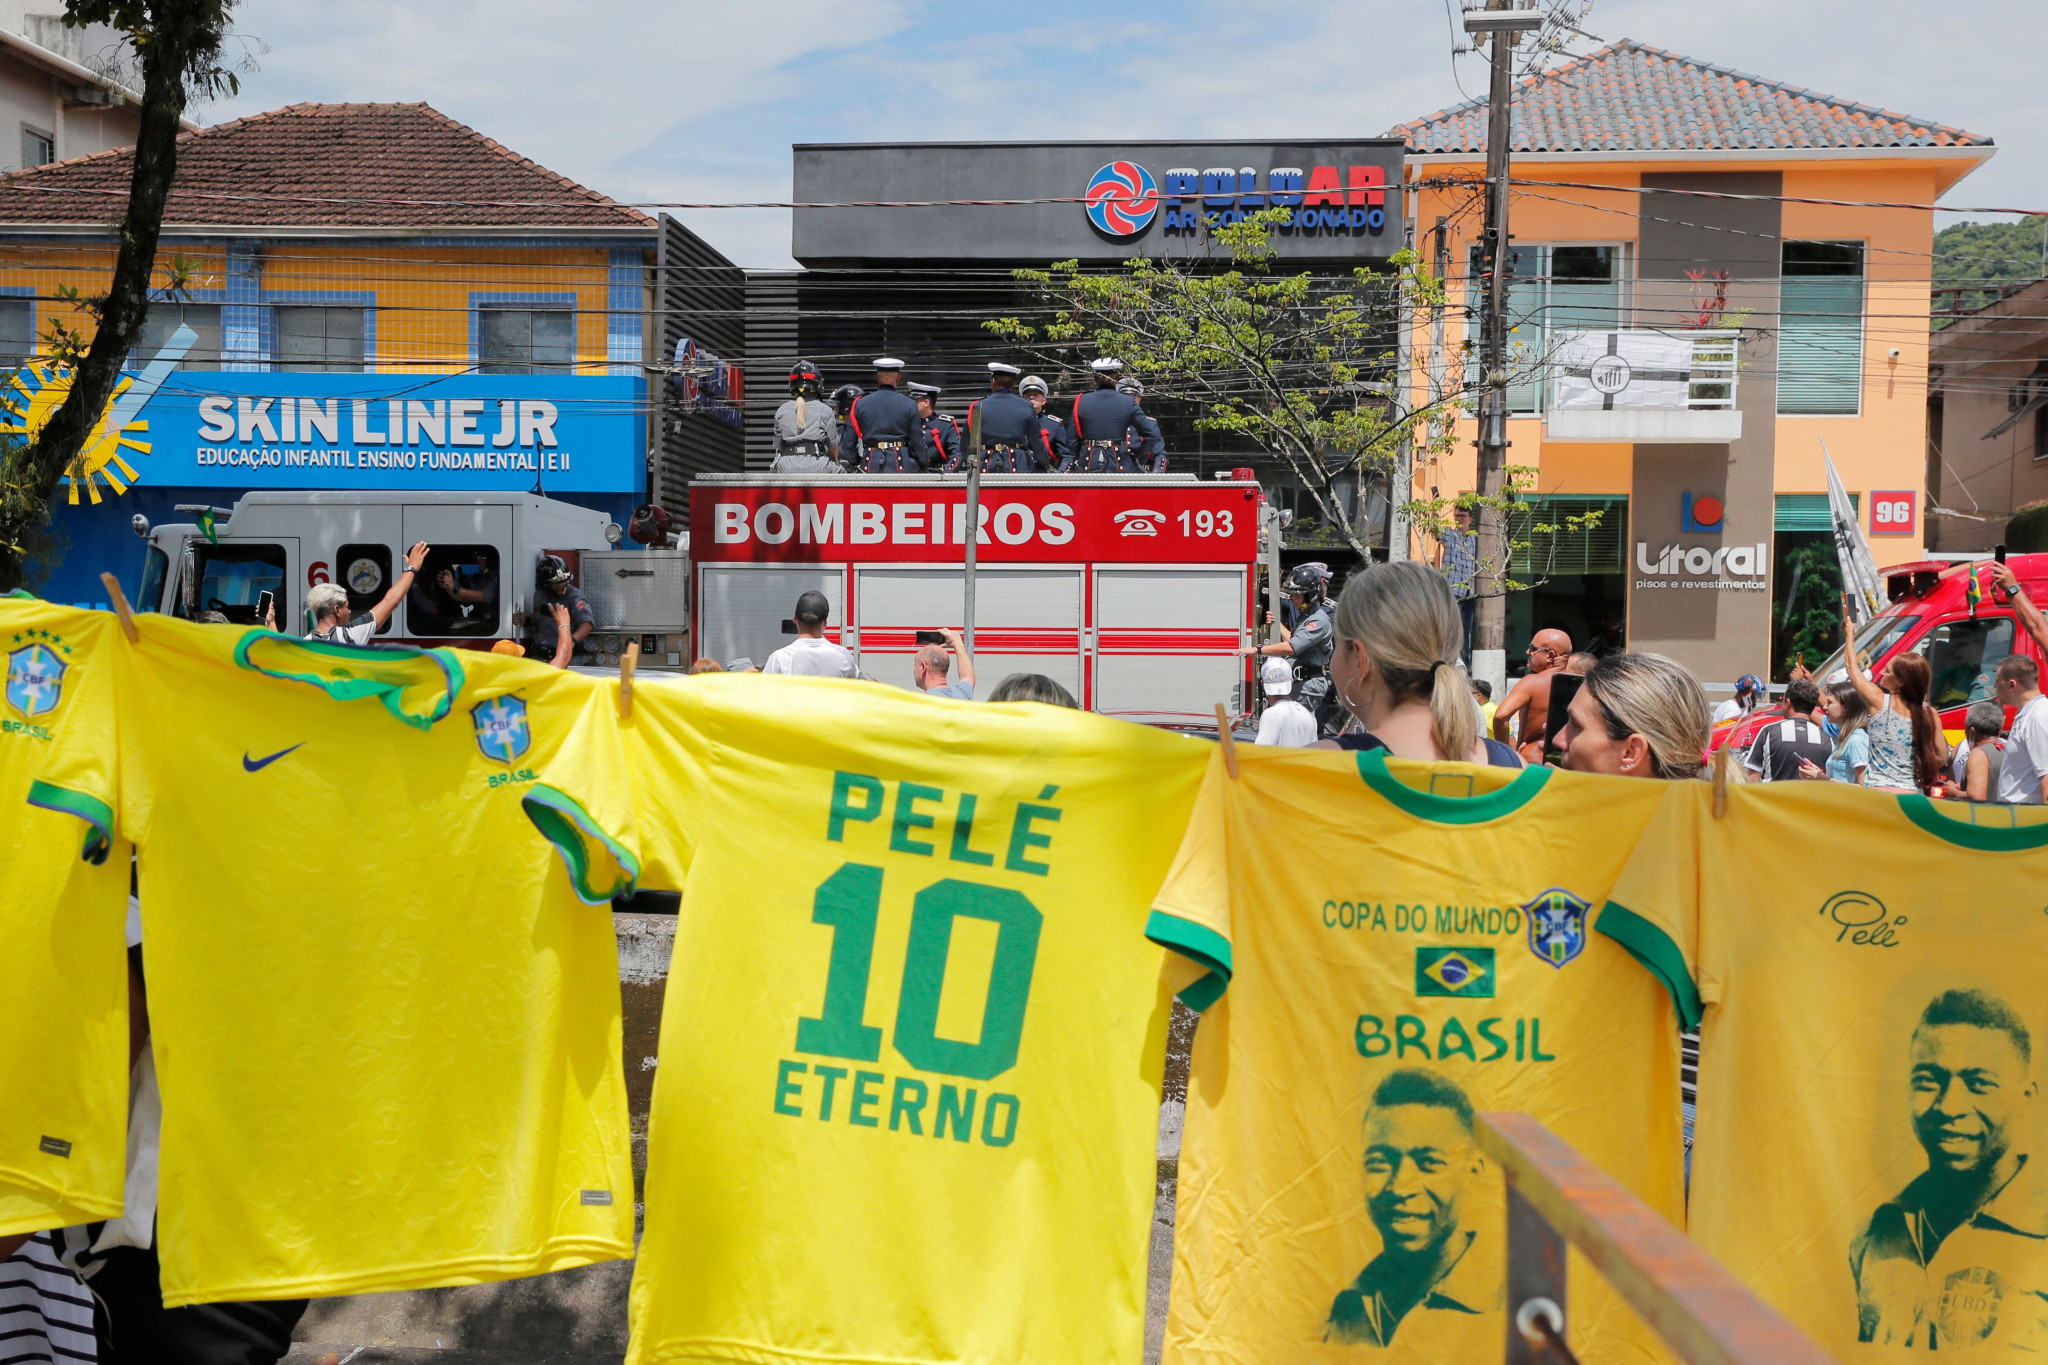 Thousands gather for public funeral of Brazilian football legend Pelé